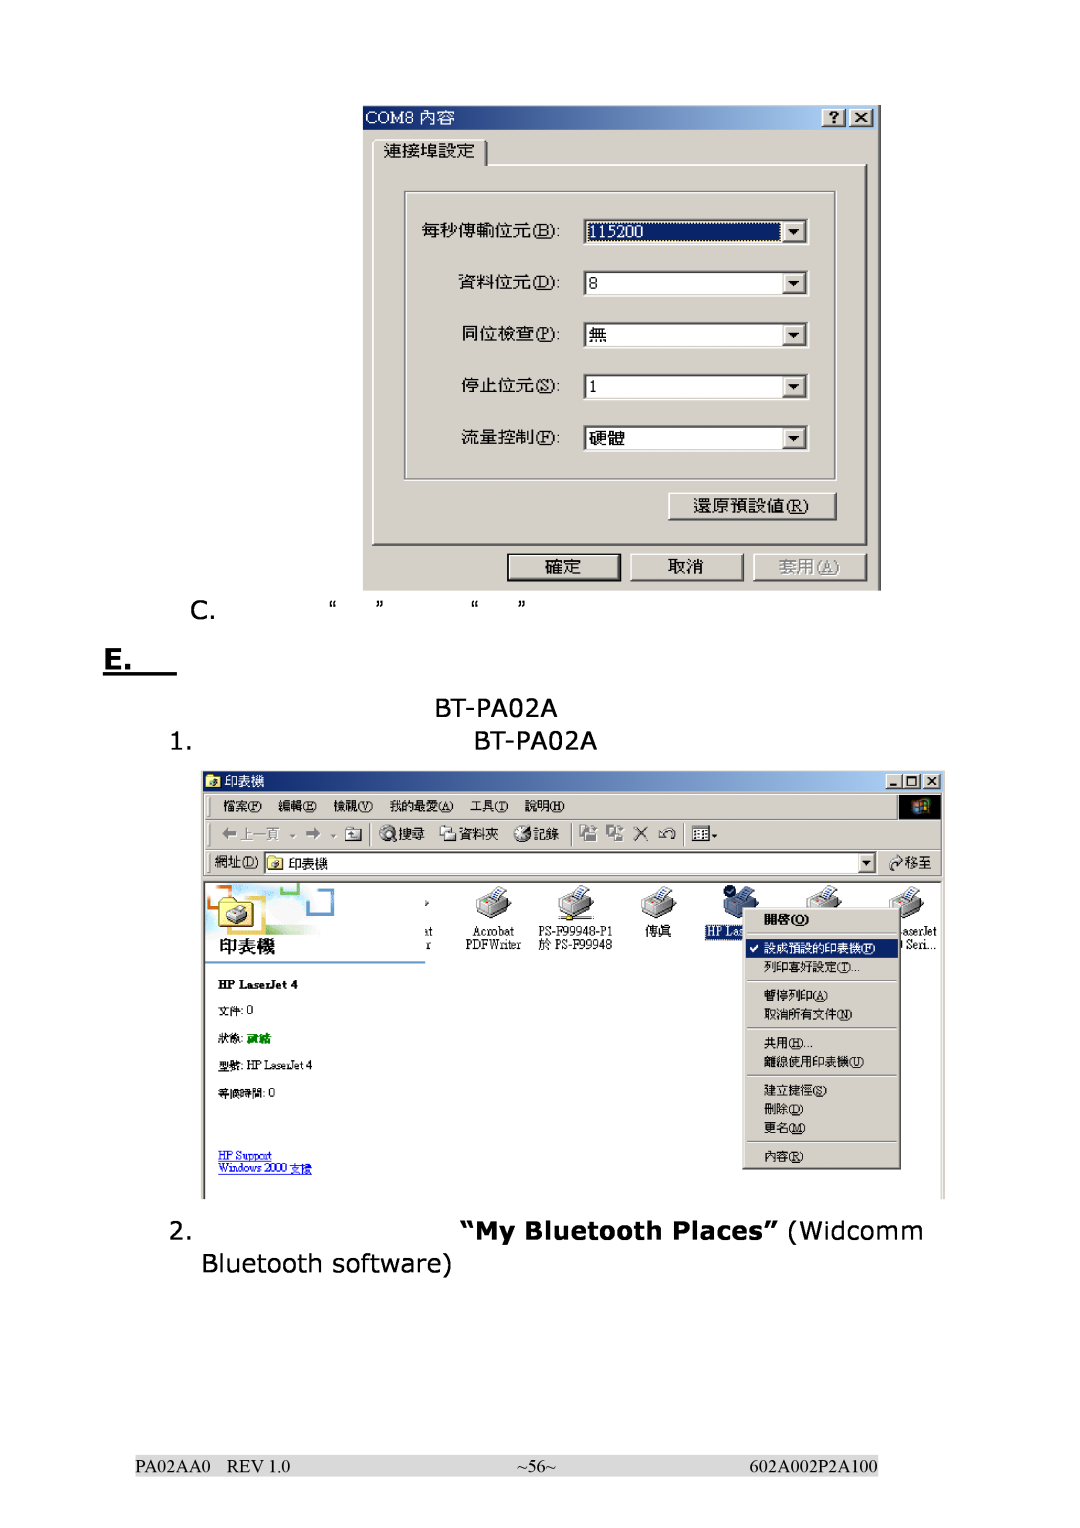 EPoX Computer C. “”“”, BT-PA02A 1. BT-PA02A, 2. “My Bluetooth Places” Widcomm Bluetooth software, PA02AA0 REV, ~56~ 